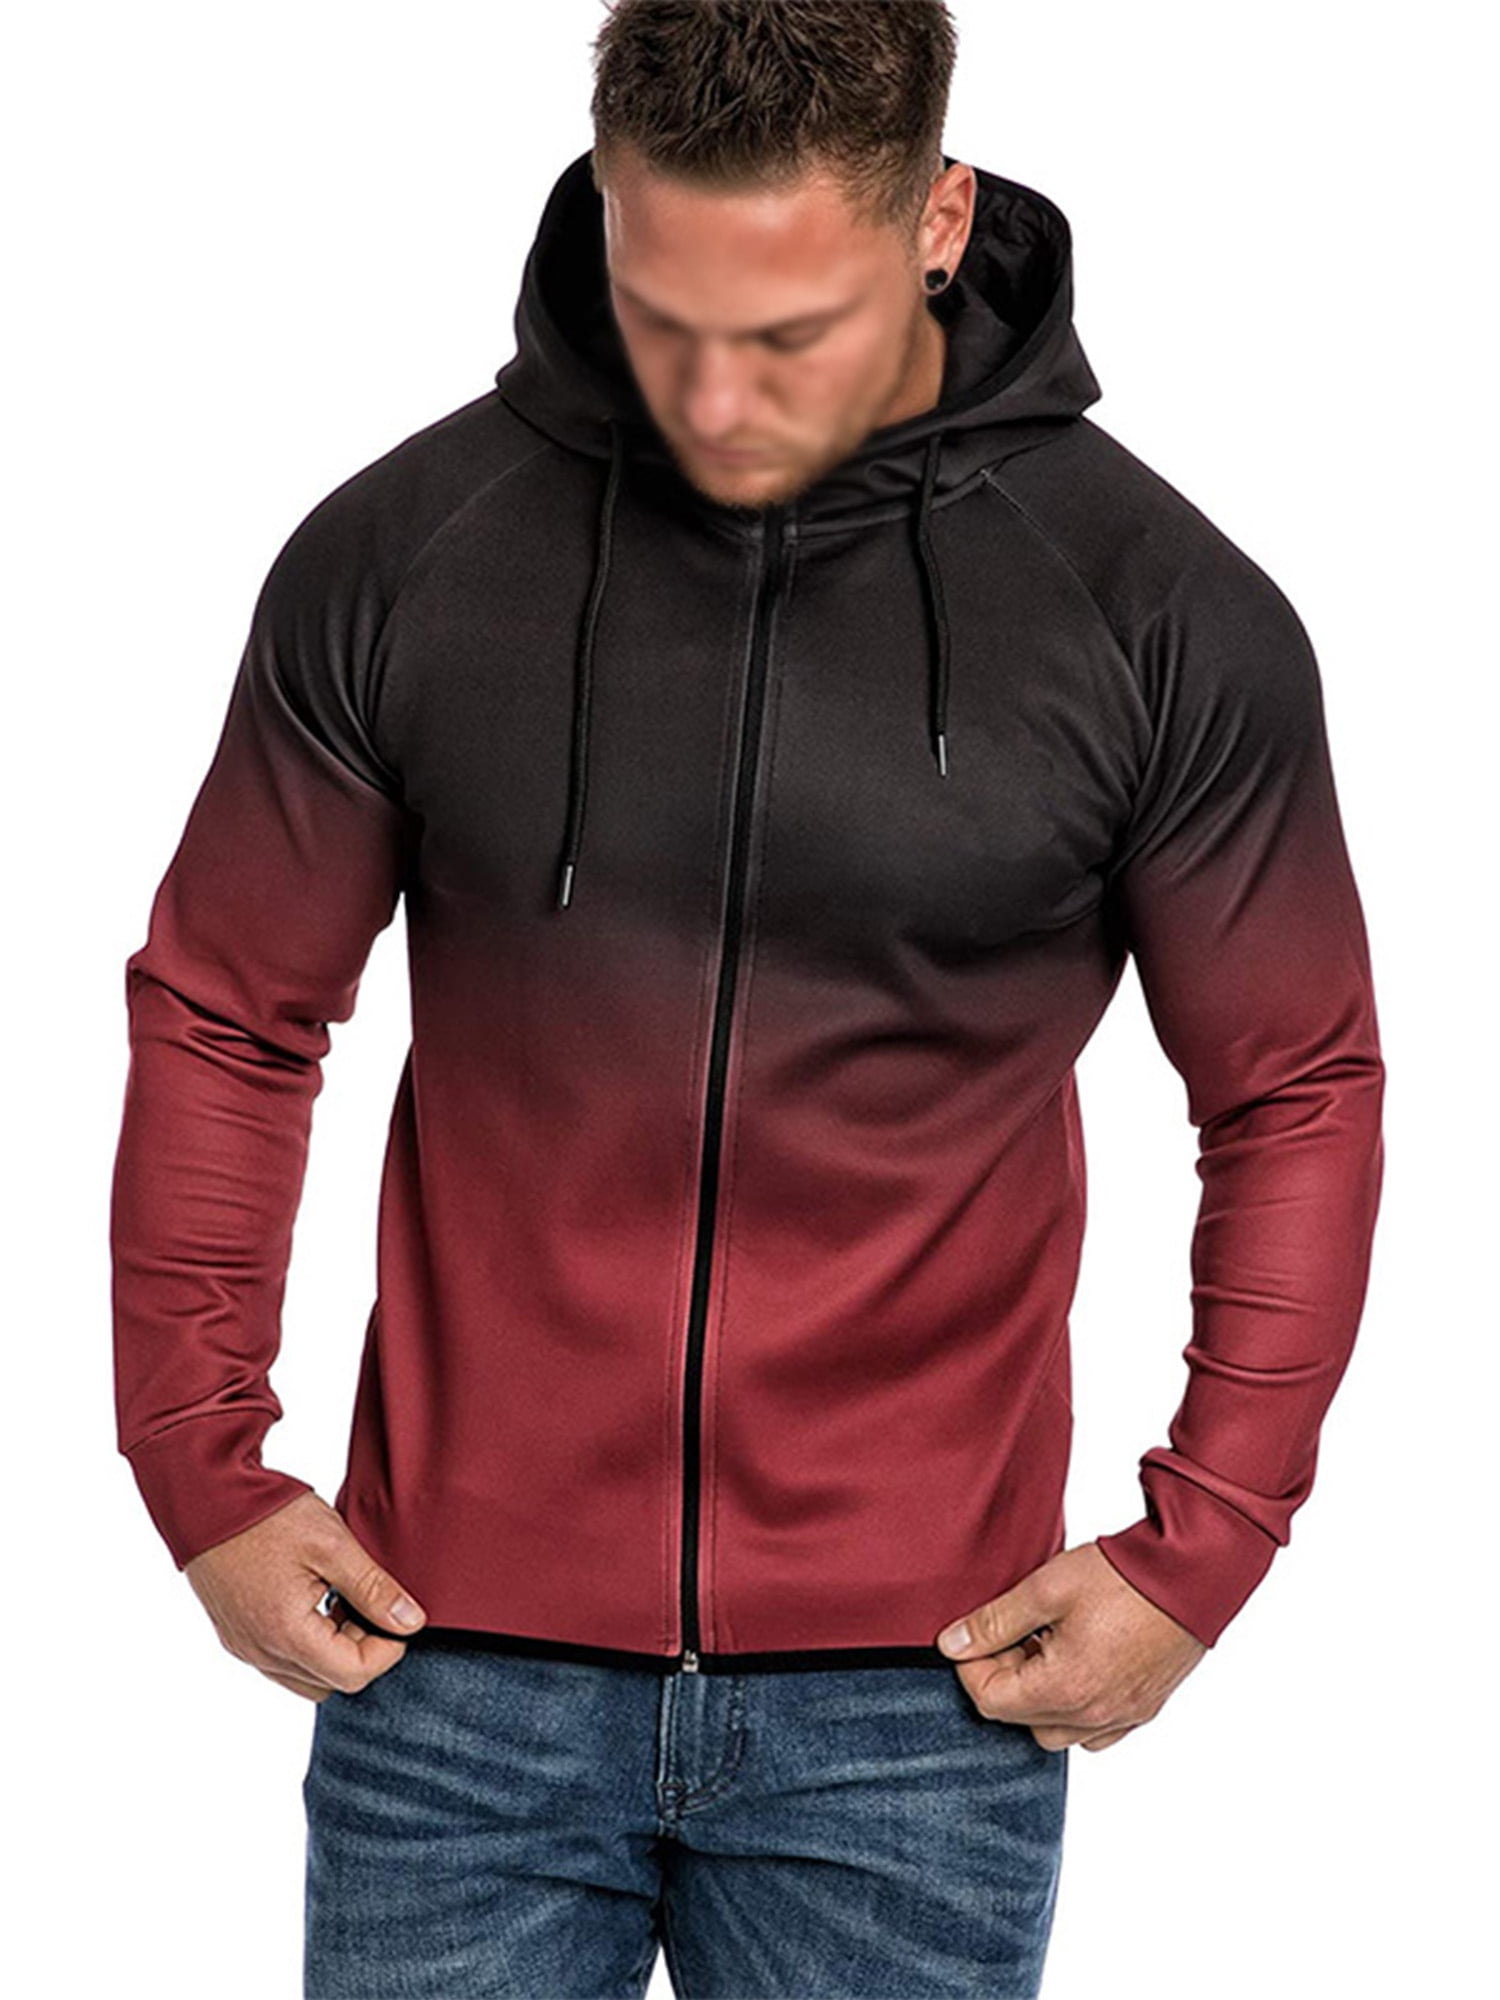 Long Sleeve Casual Solid Hoodies Coat Outwear MODOQO Pullover Sweatshirt for Men 